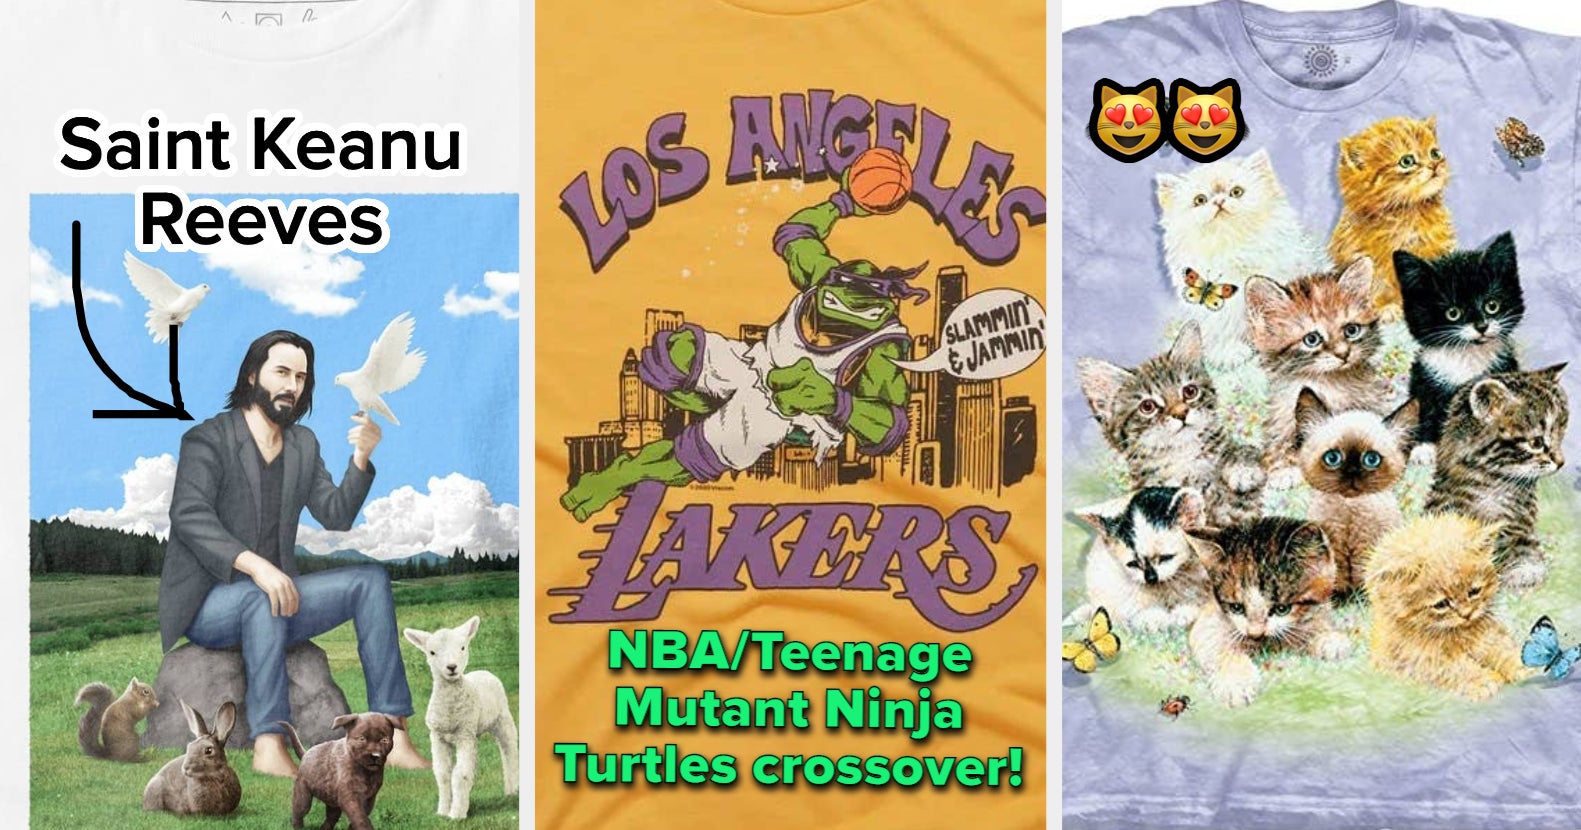 NBA graphic designer back with new Disney/NBA crossover jerseys